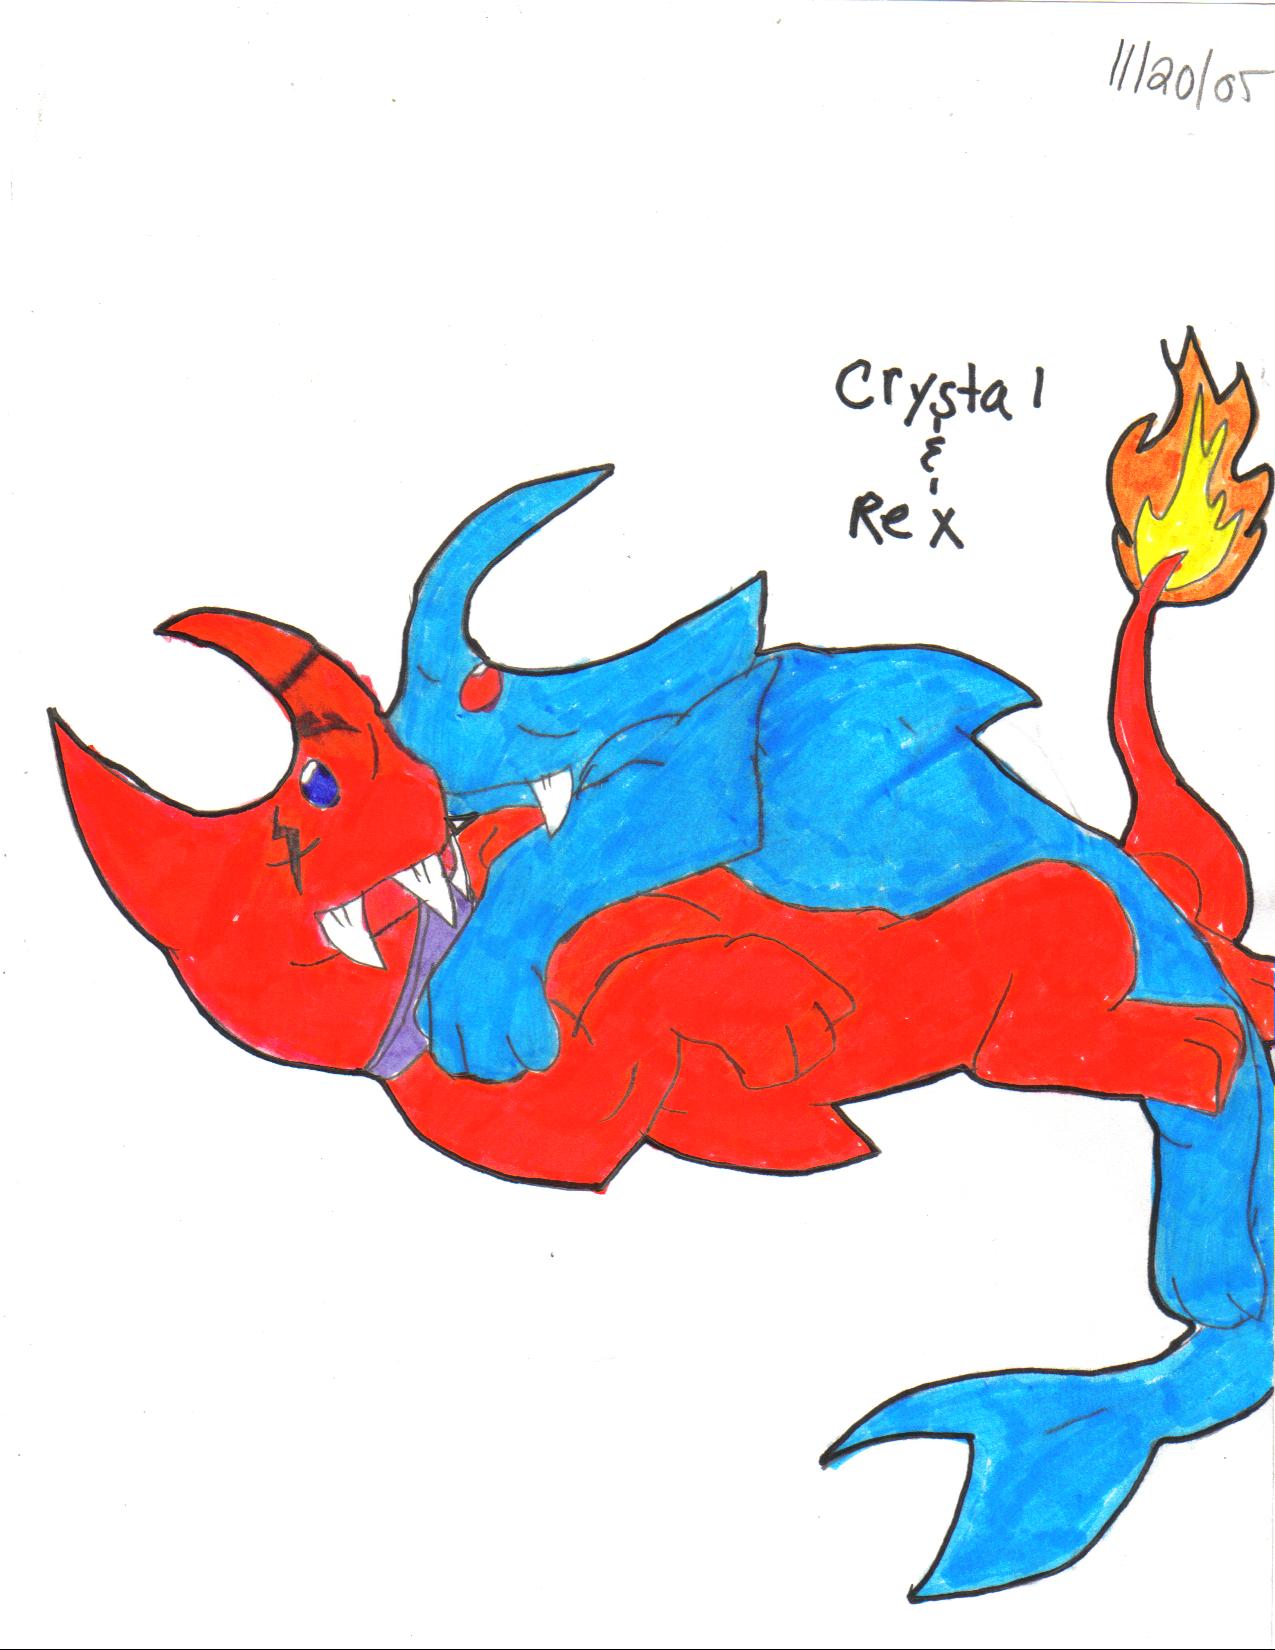 Rex and Crystal by crocdragon89